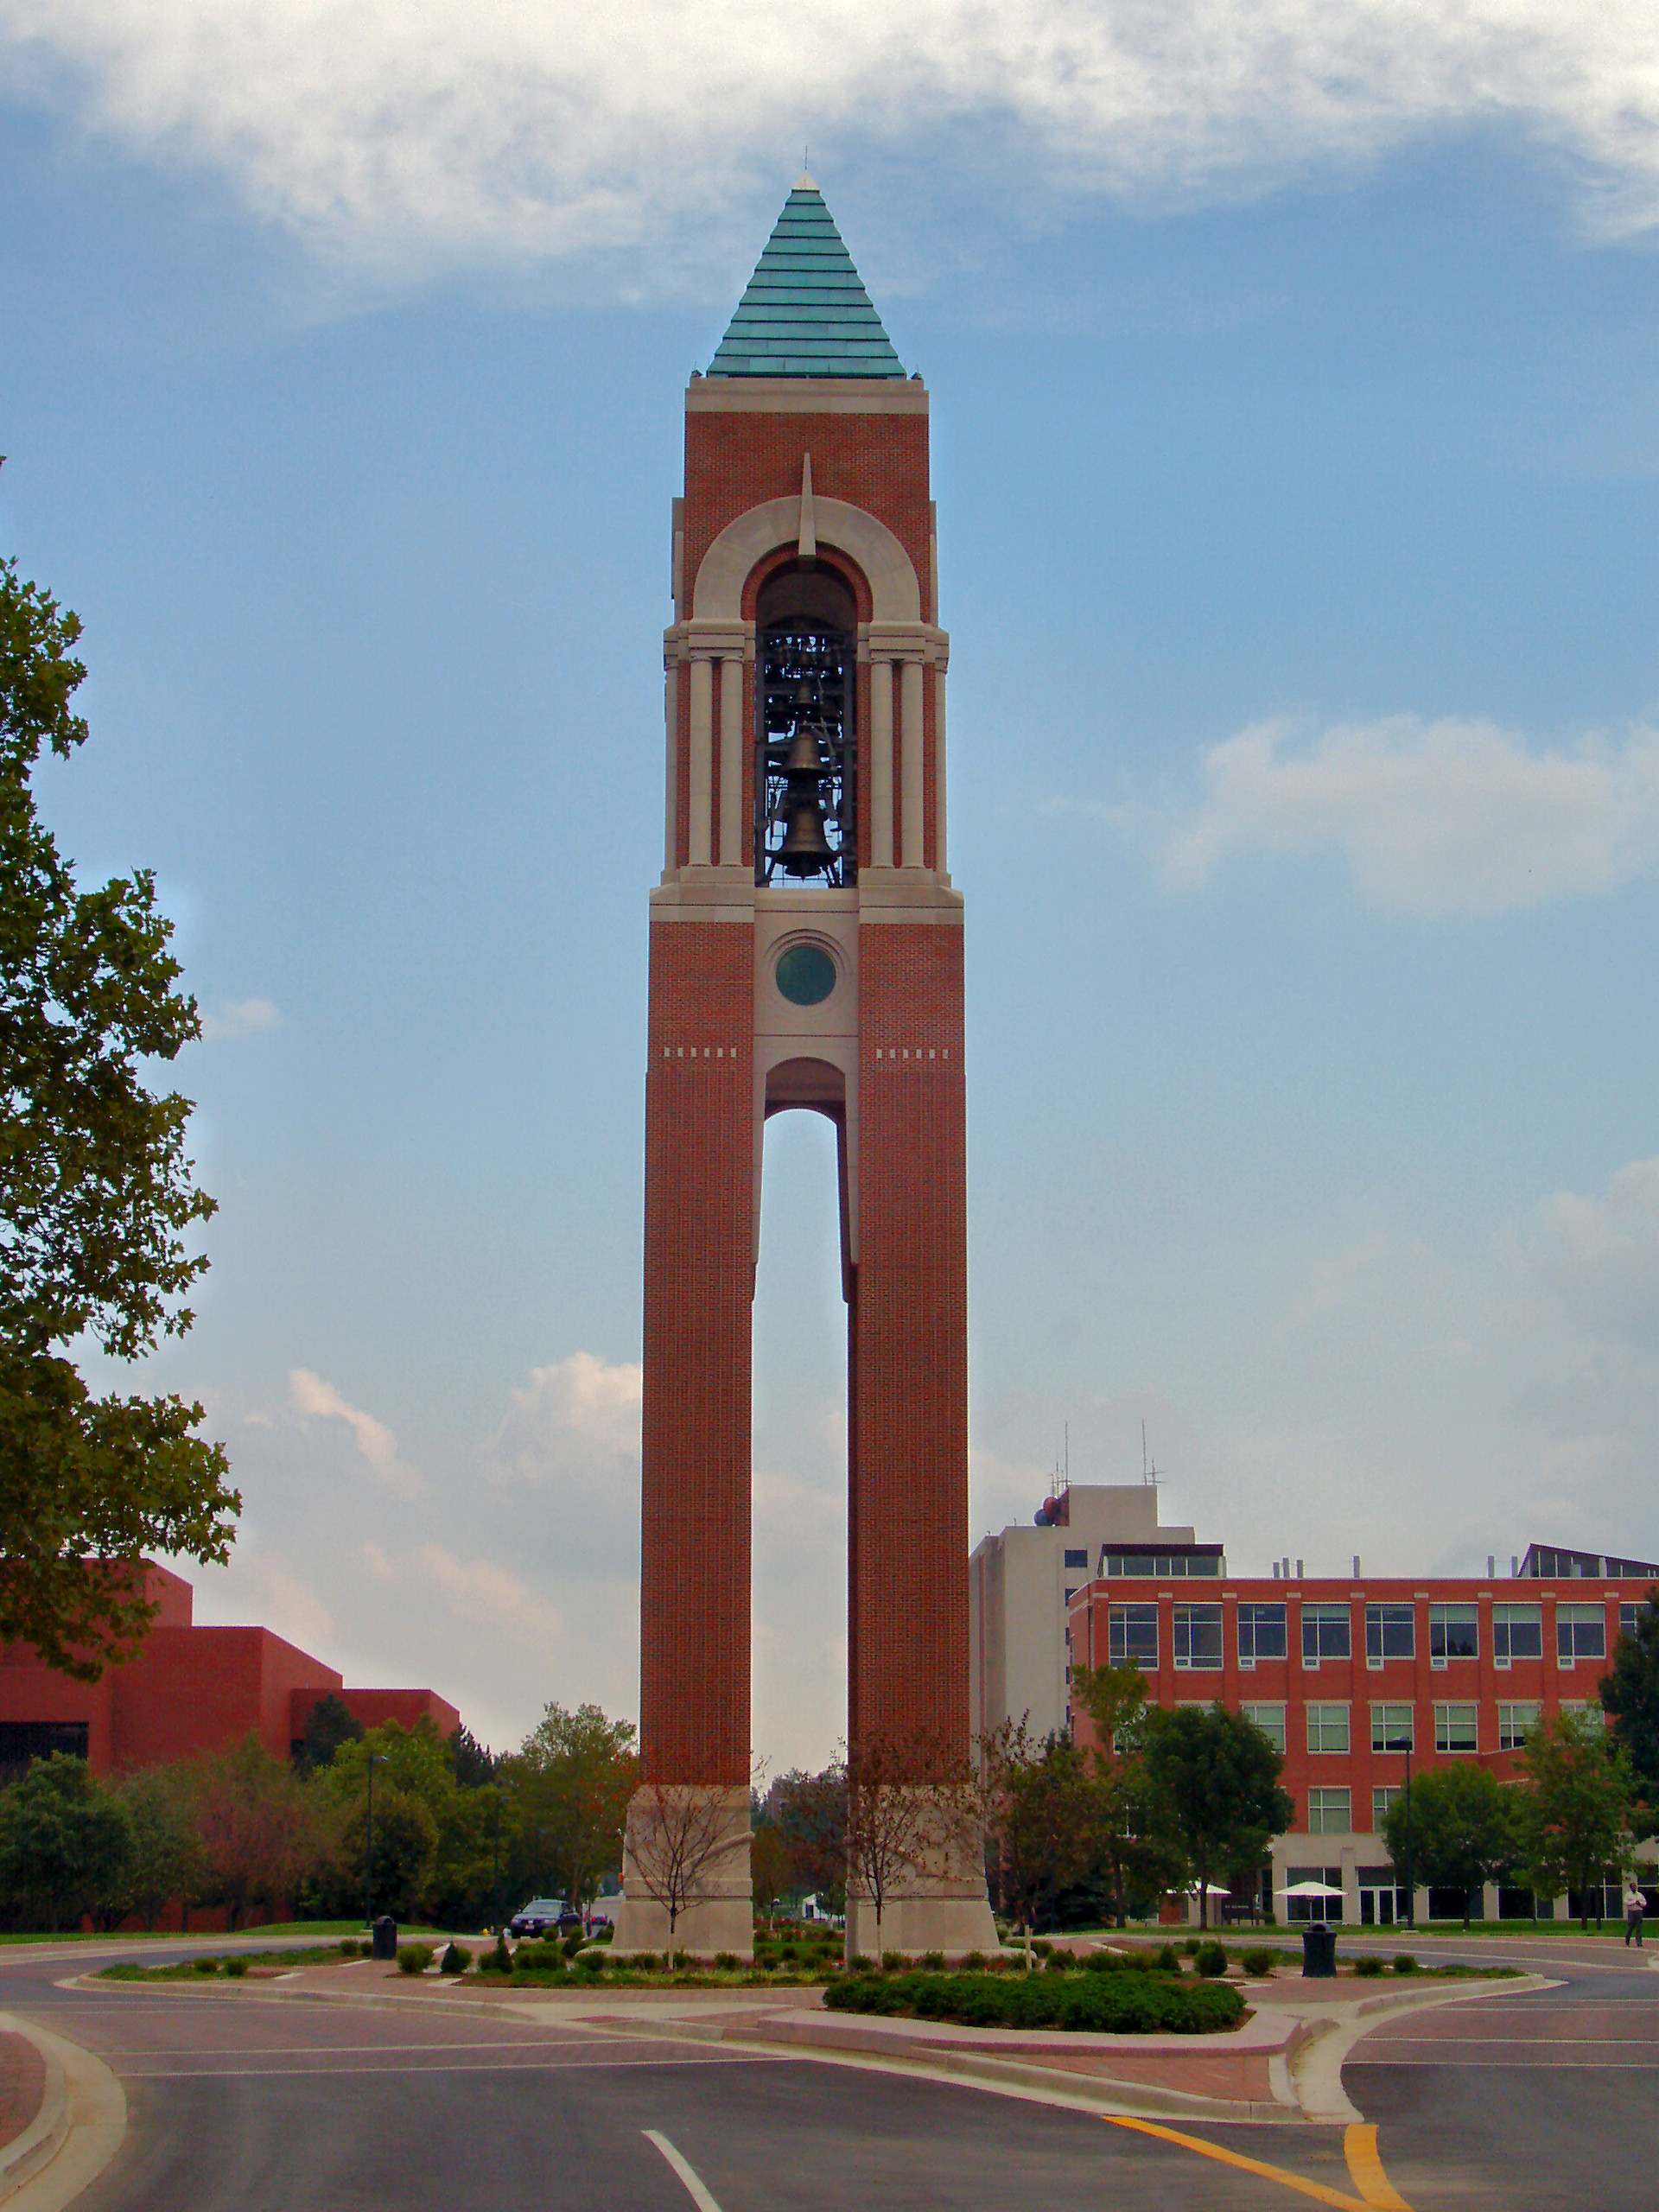 File:Ball-state-university-bell-tower.jpg - Wikimedia Commons